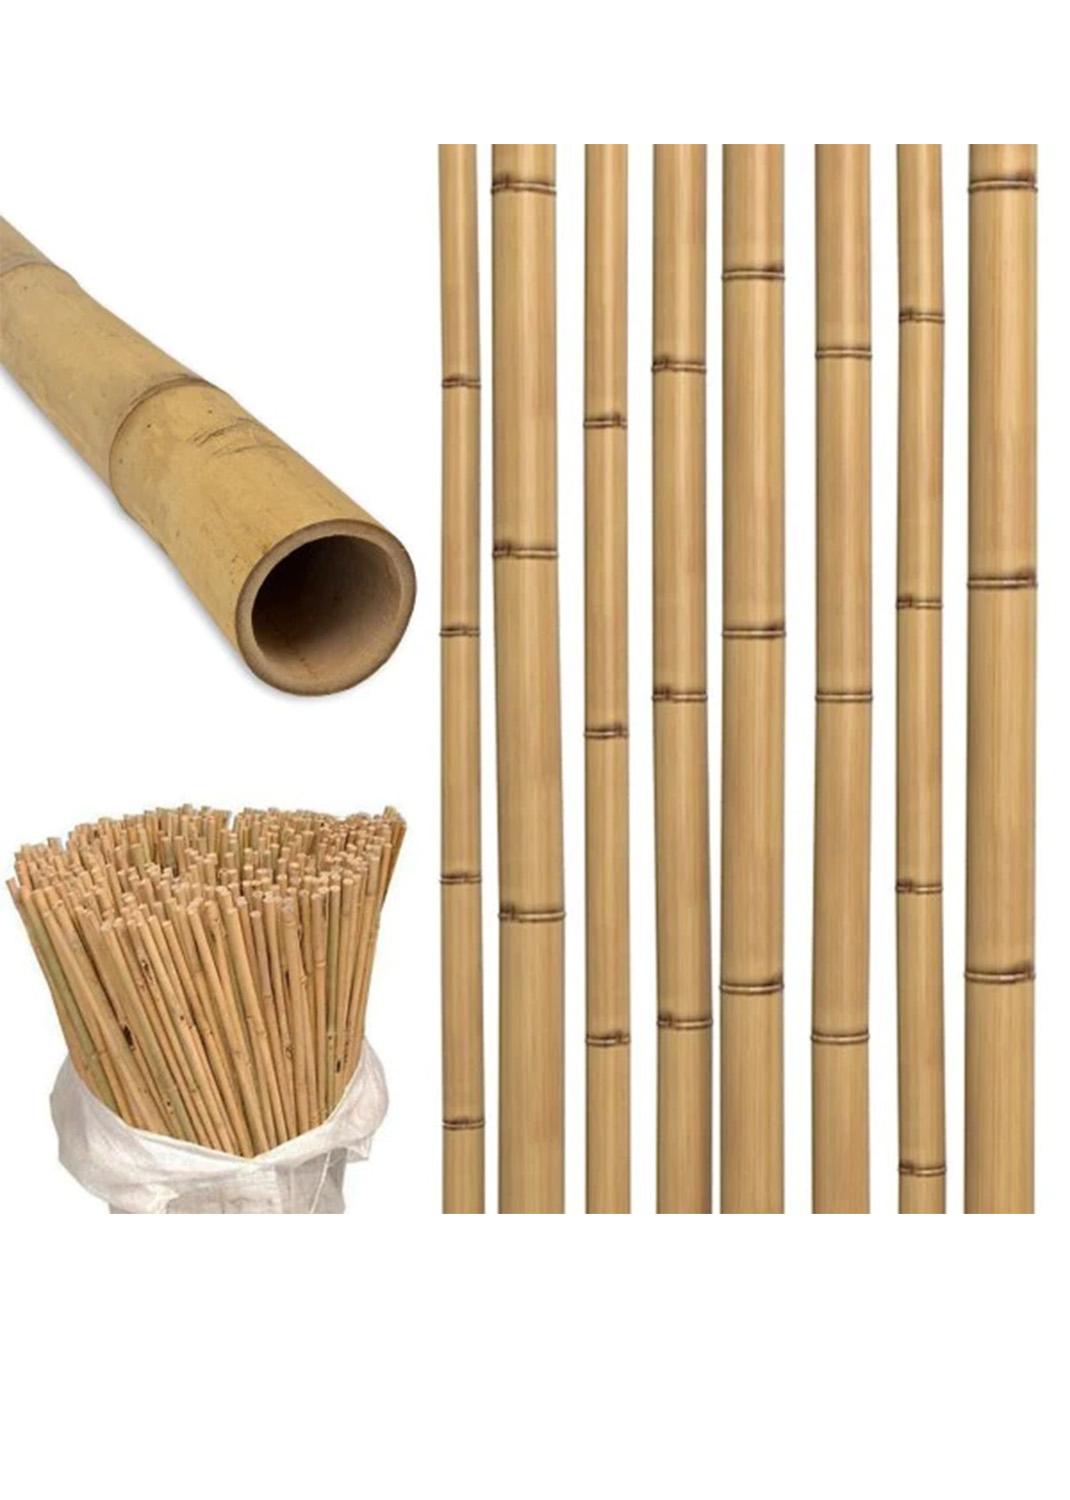 Bamboo Stick 15-30mm Dia